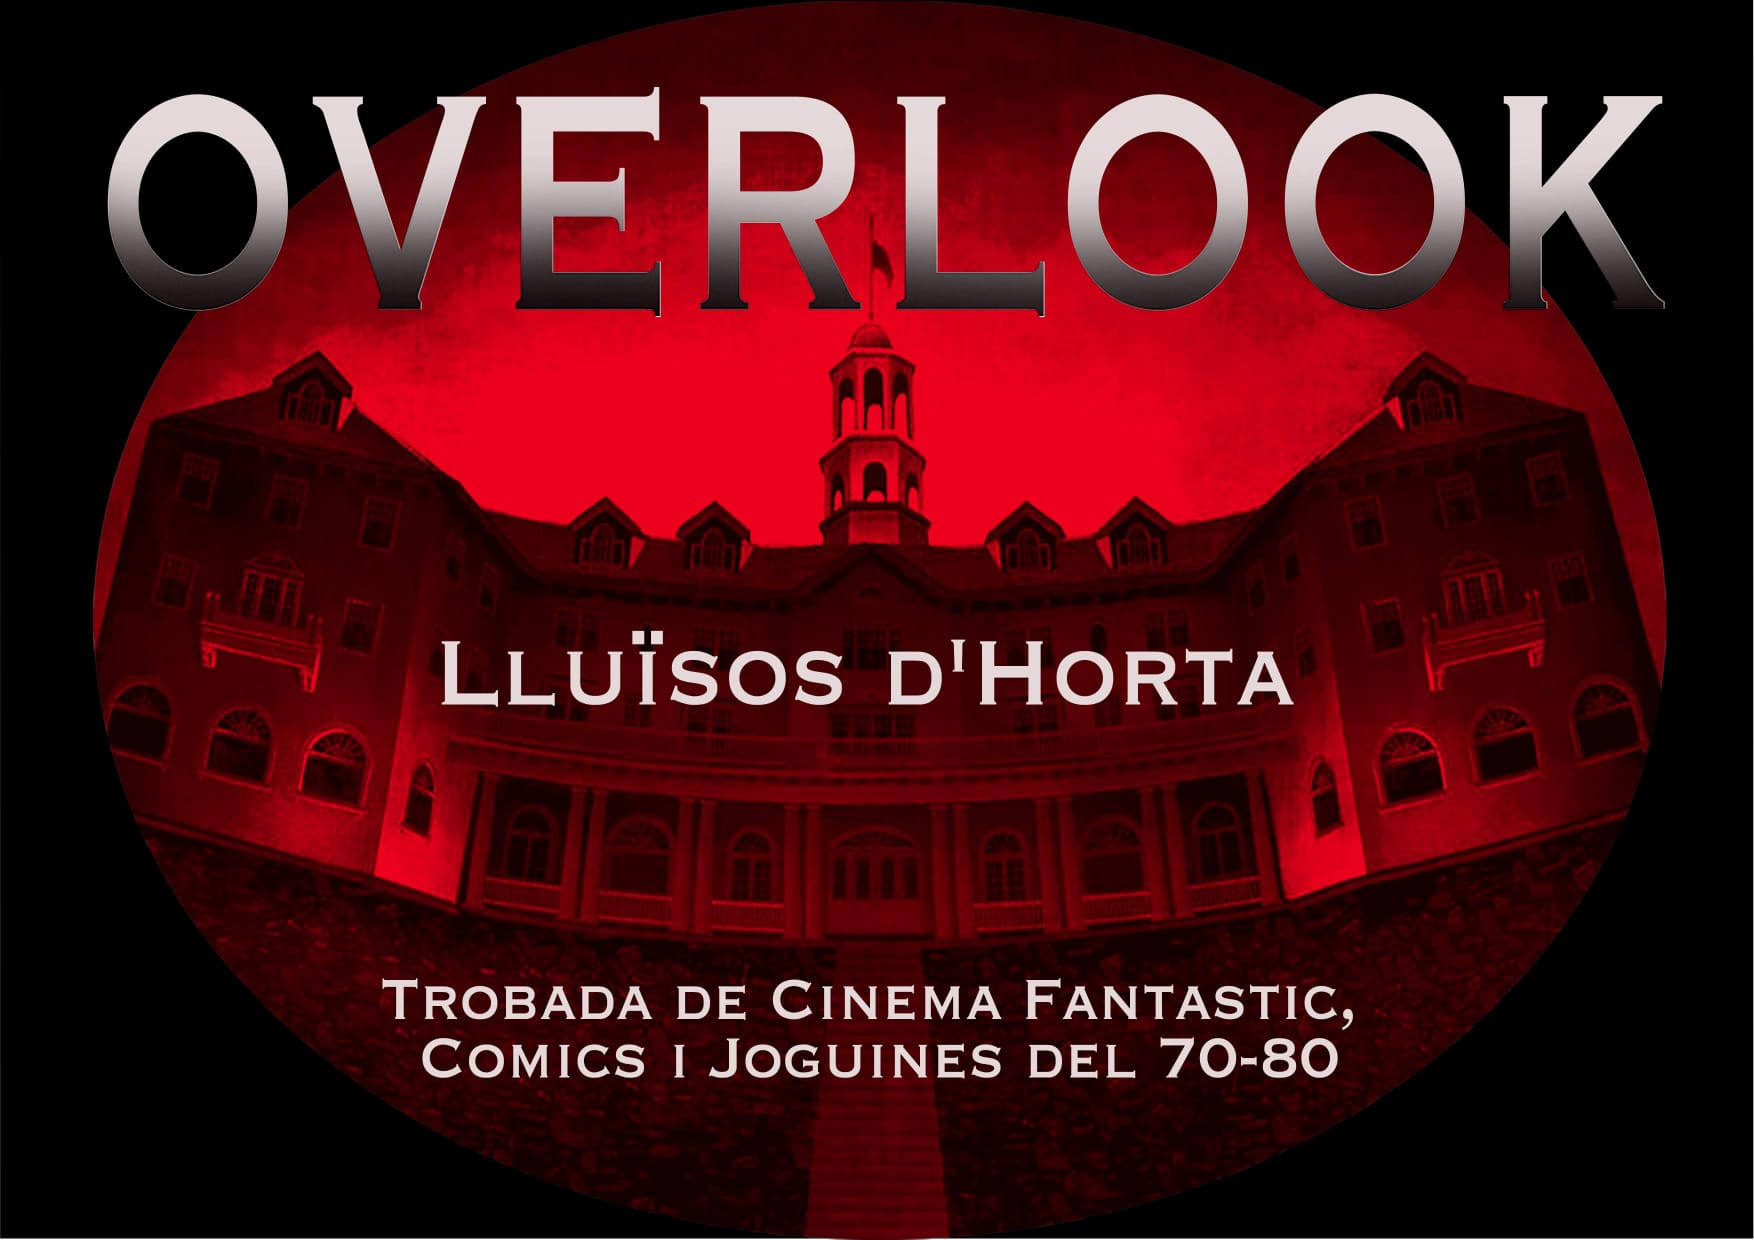 I Festival de Cinema Overlook